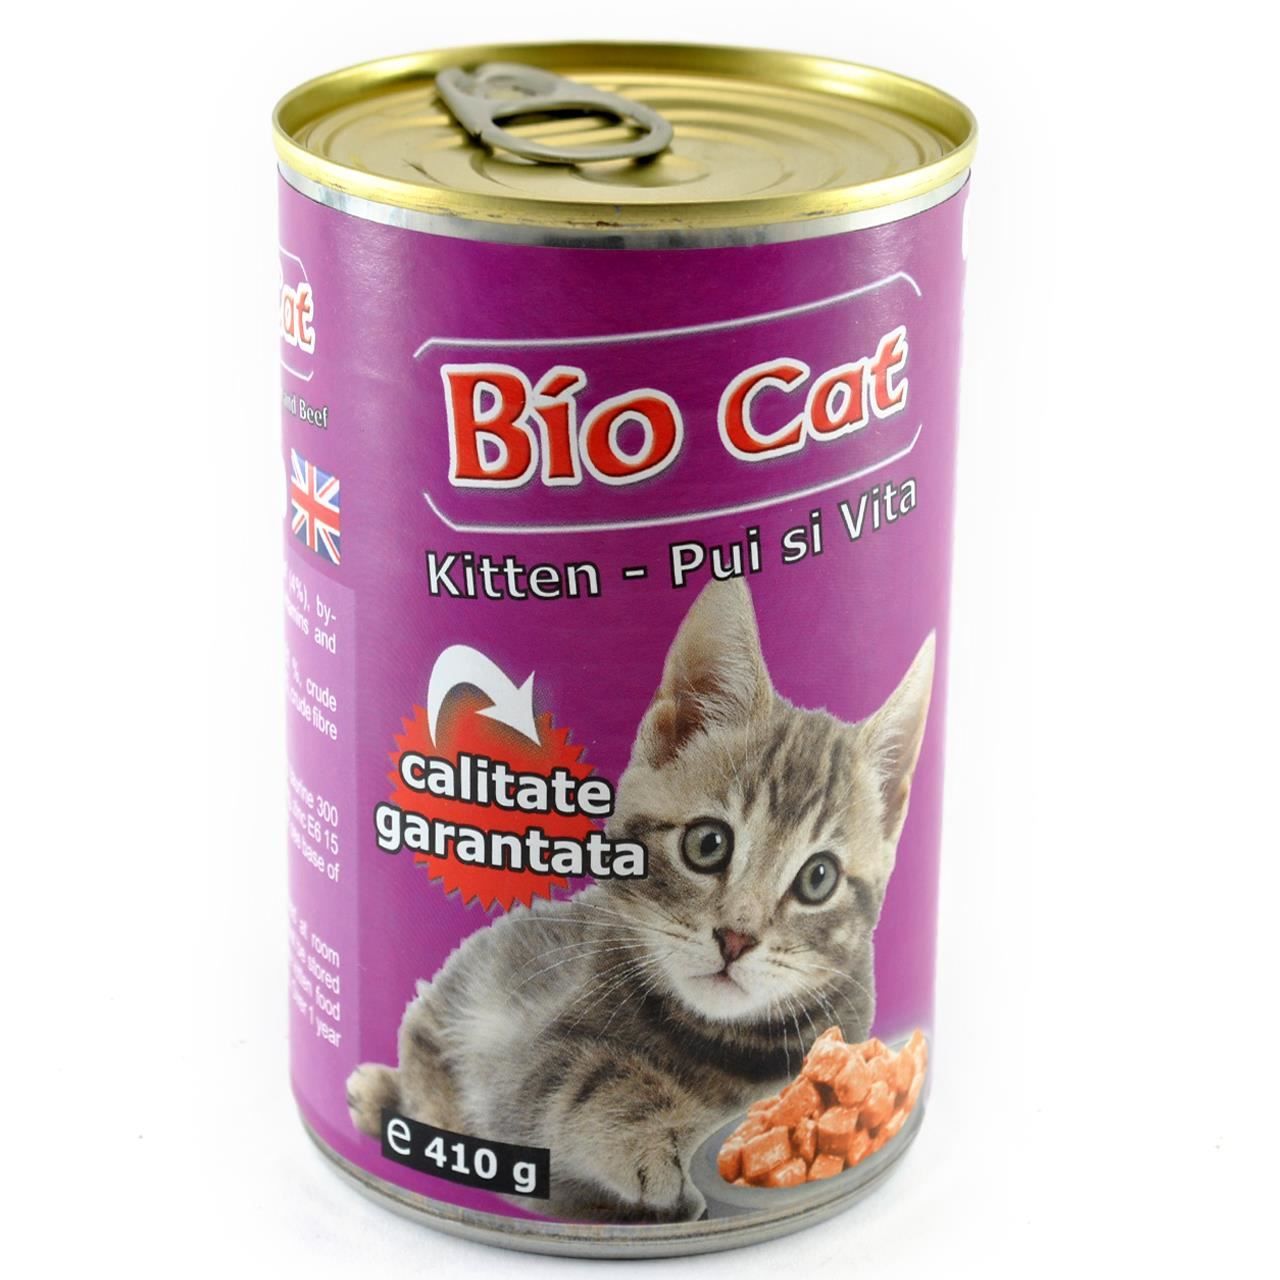 Bio Cat Kitten Pui & Vita, 410 g